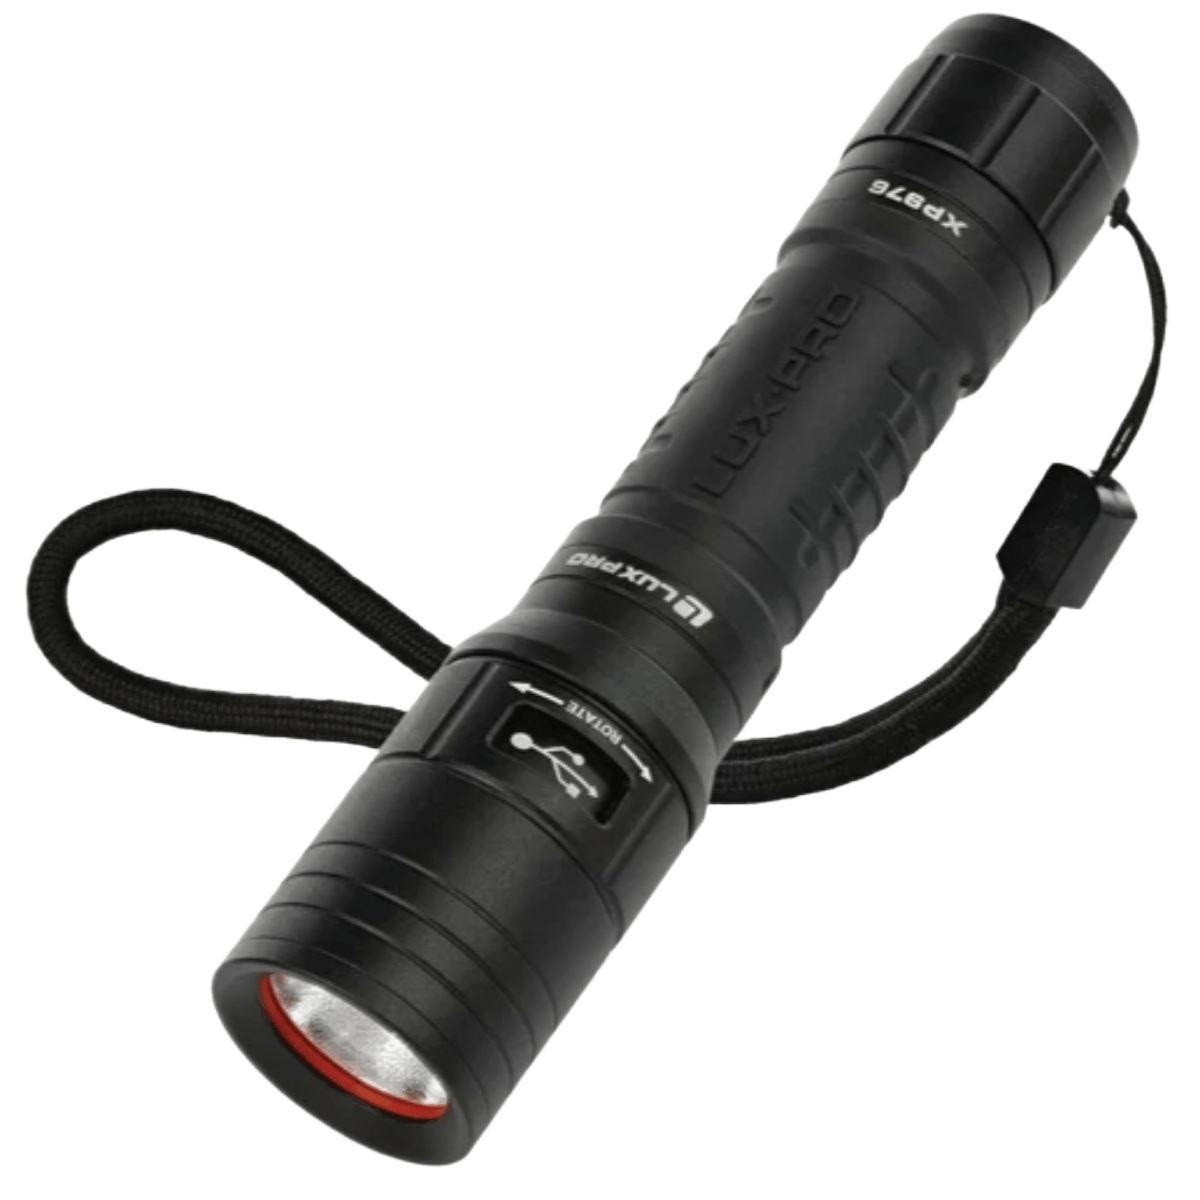 Lux Pro Pro Series 450 Lumen Led Rechargeable Flashlight